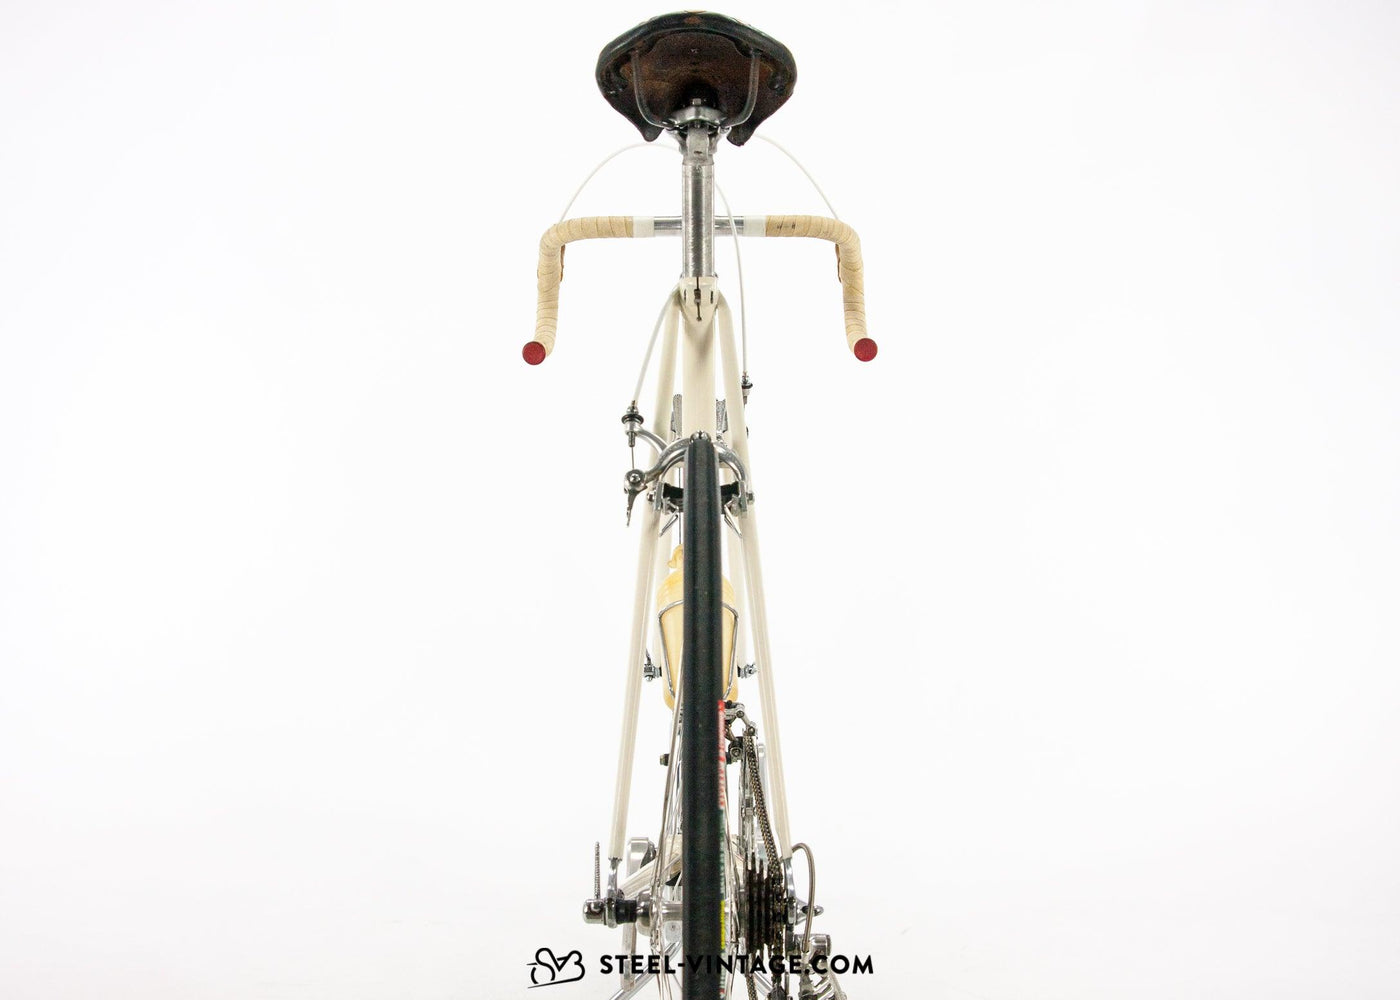 Faema Team Bike by Pelà 1969 - Steel Vintage Bikes